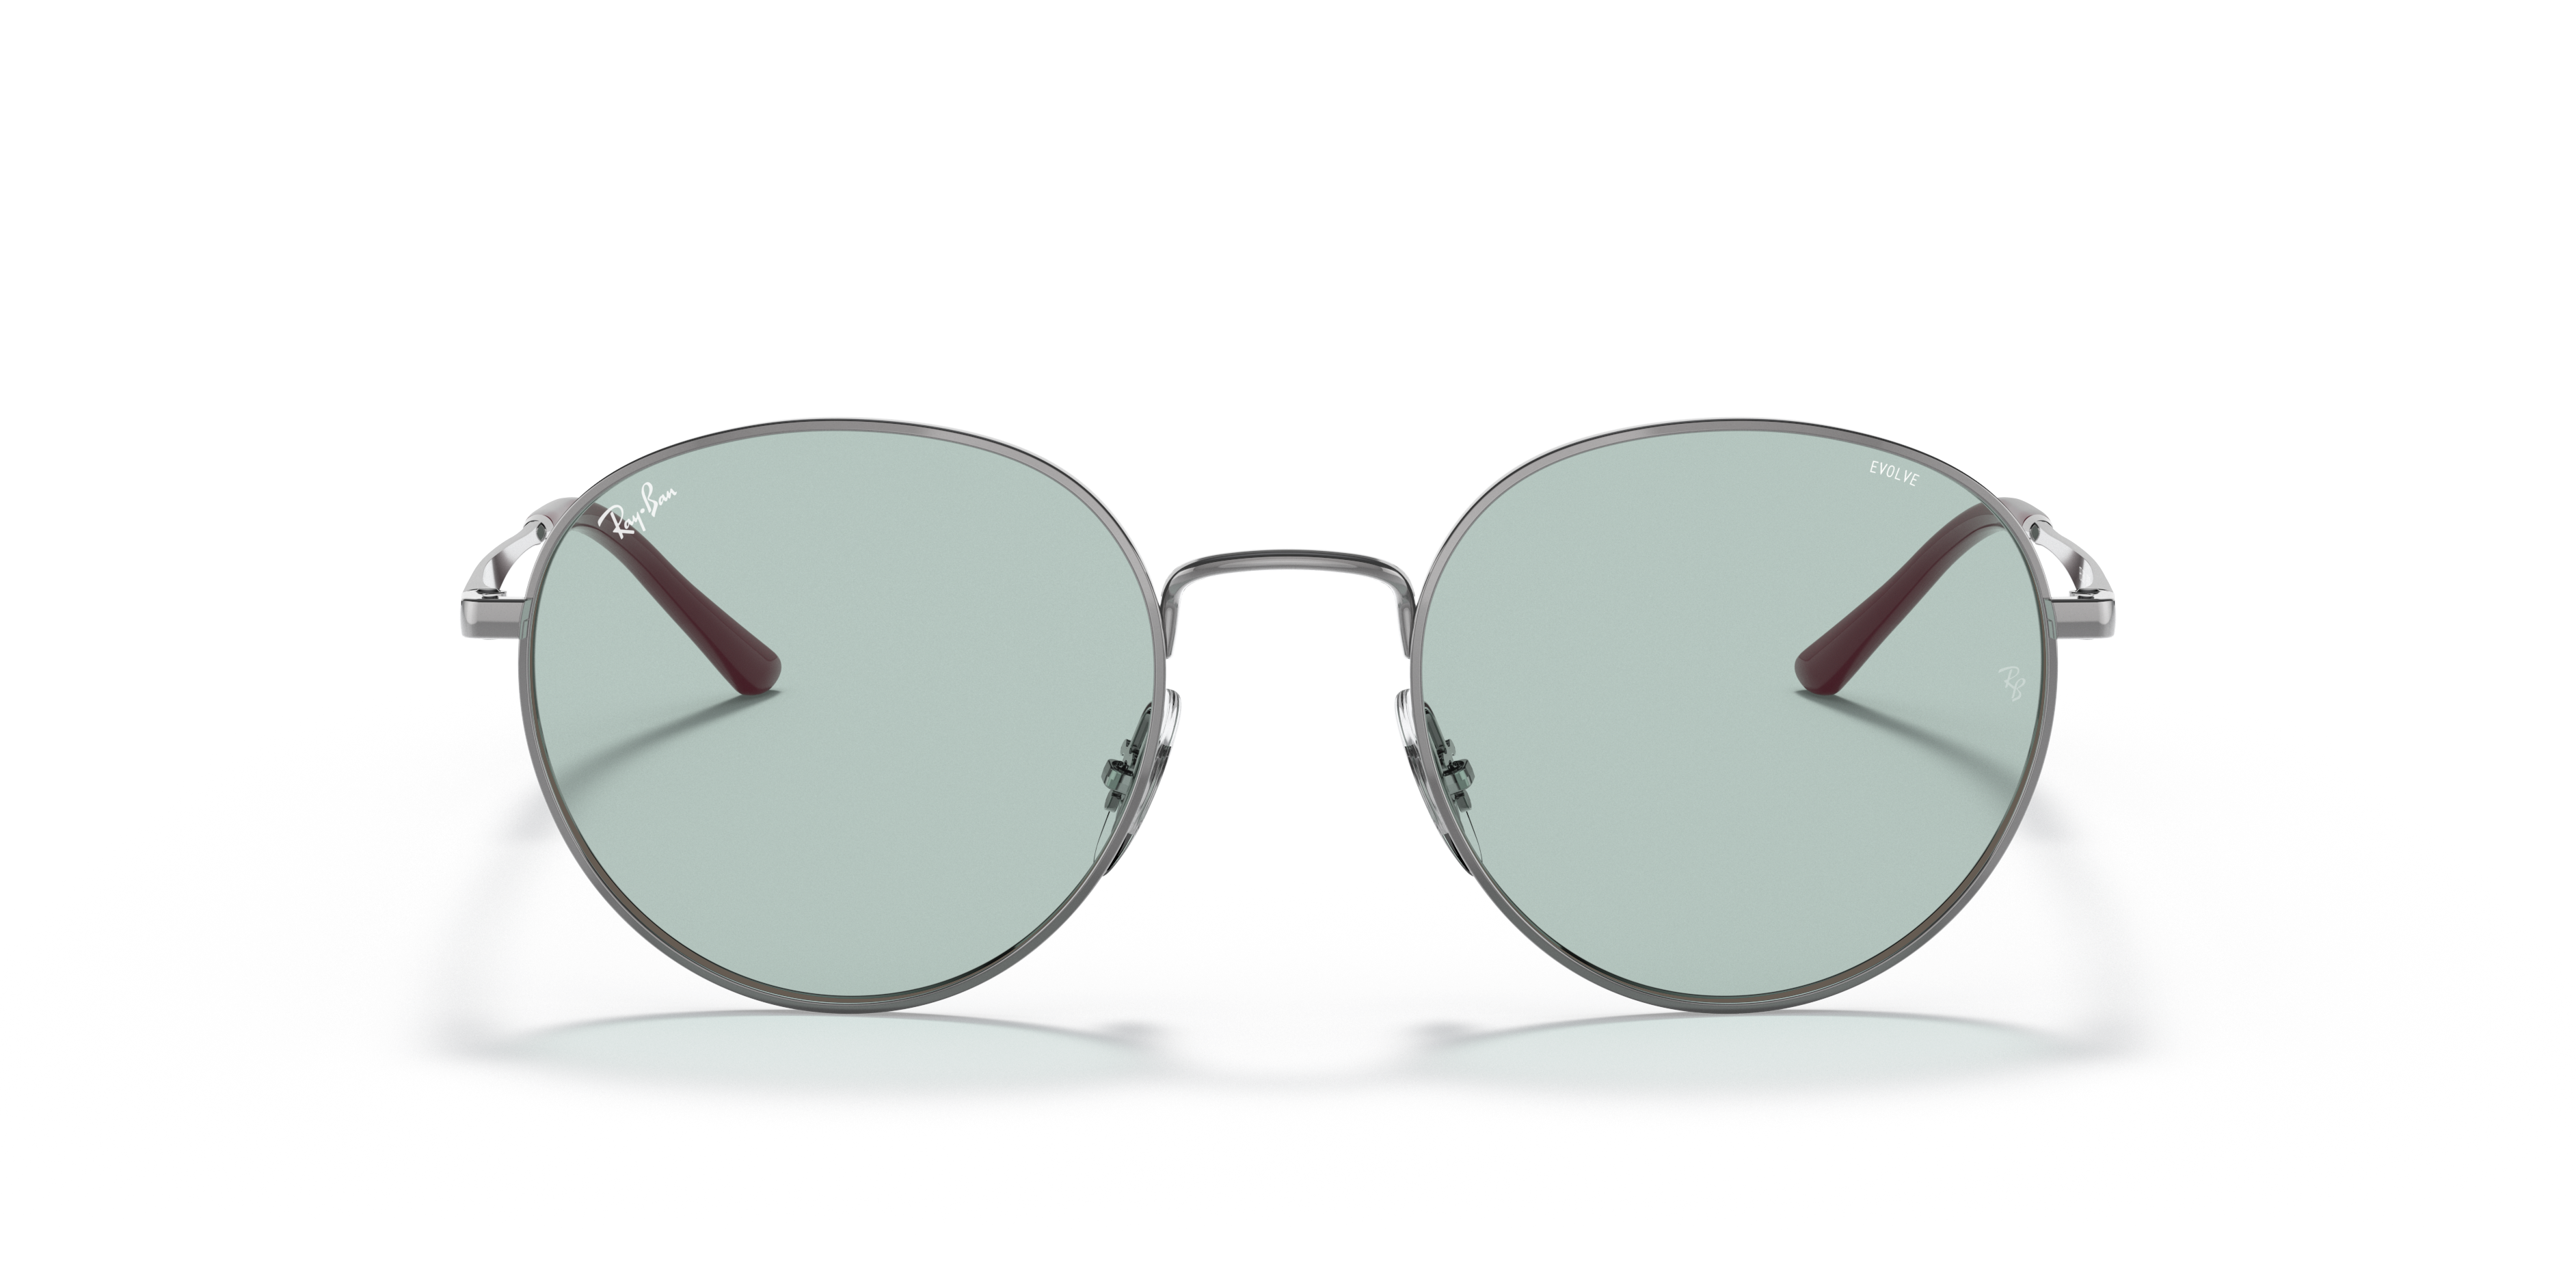 Rb3681 Evolve Sunglasses in Gunmetal and Green Photochromic | Ray-Ban®